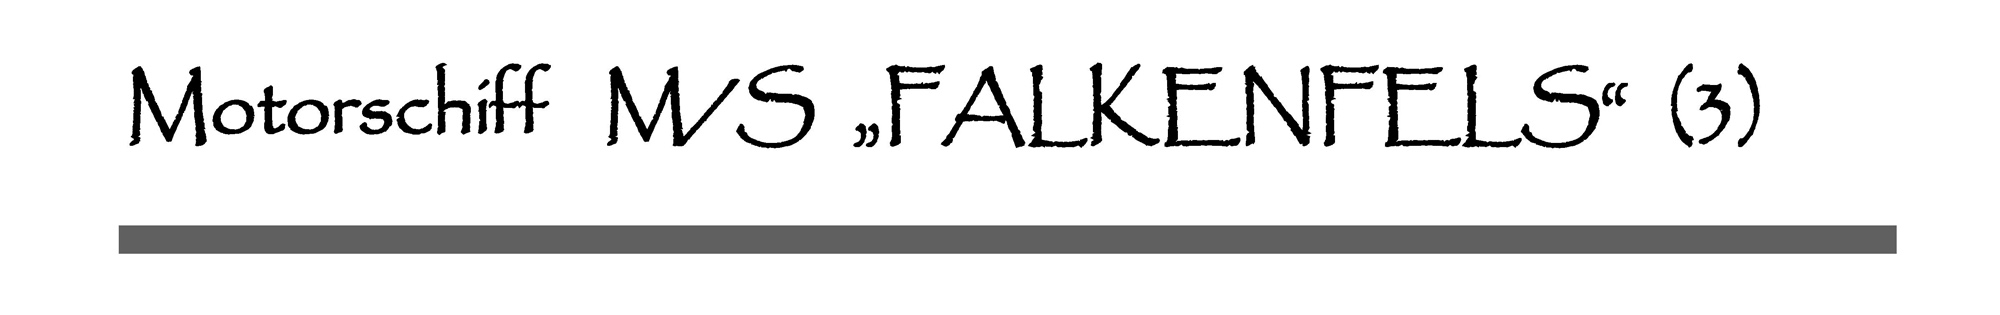 Falk08 txt